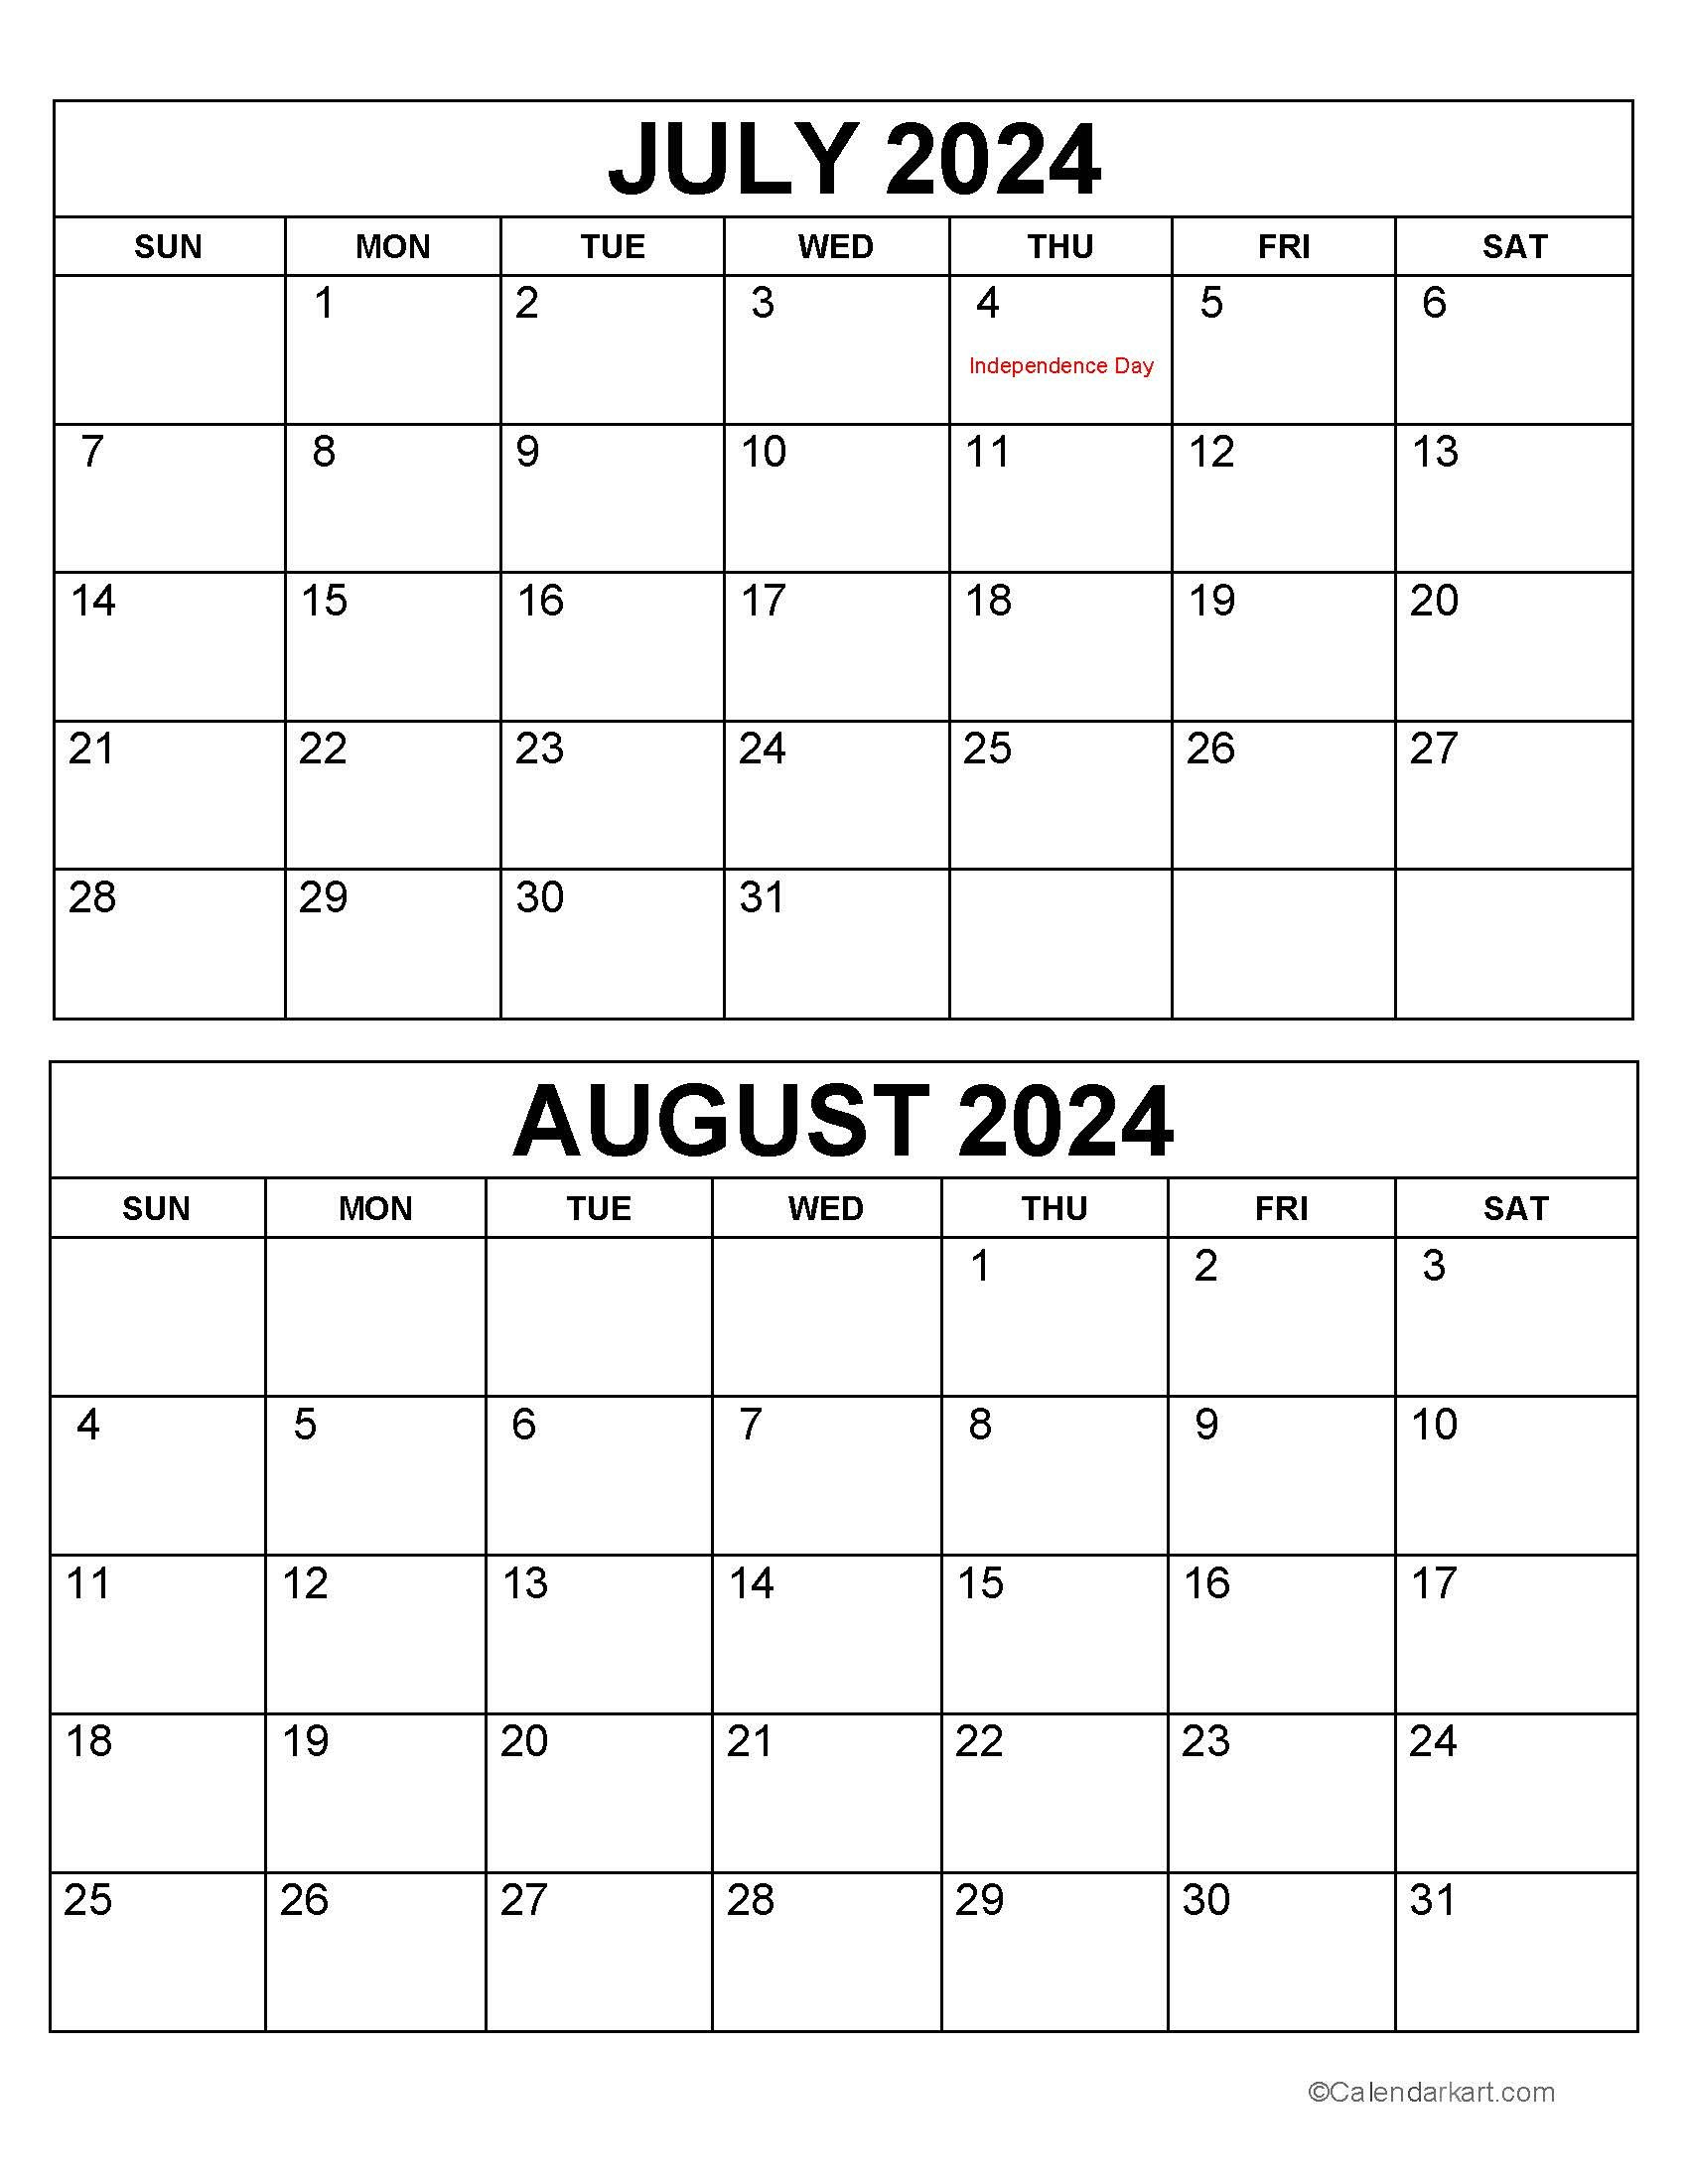 Printable July August 2024 Calendar | Calendarkart within Calendar July August 2024